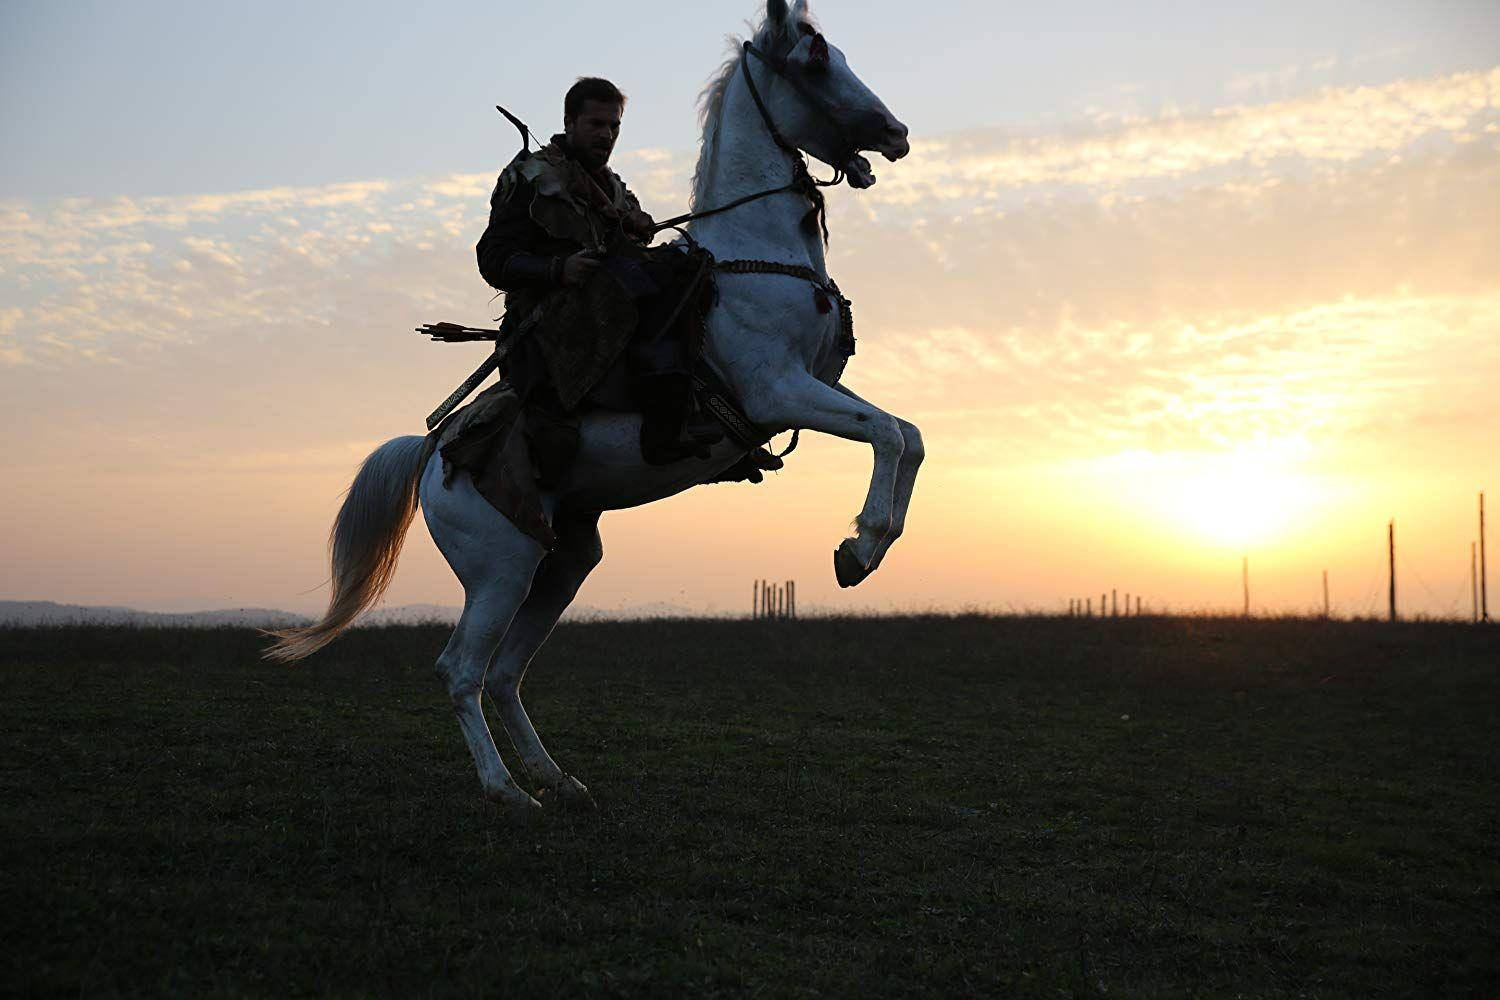 Ertugrul Gazi Riding His White Horse